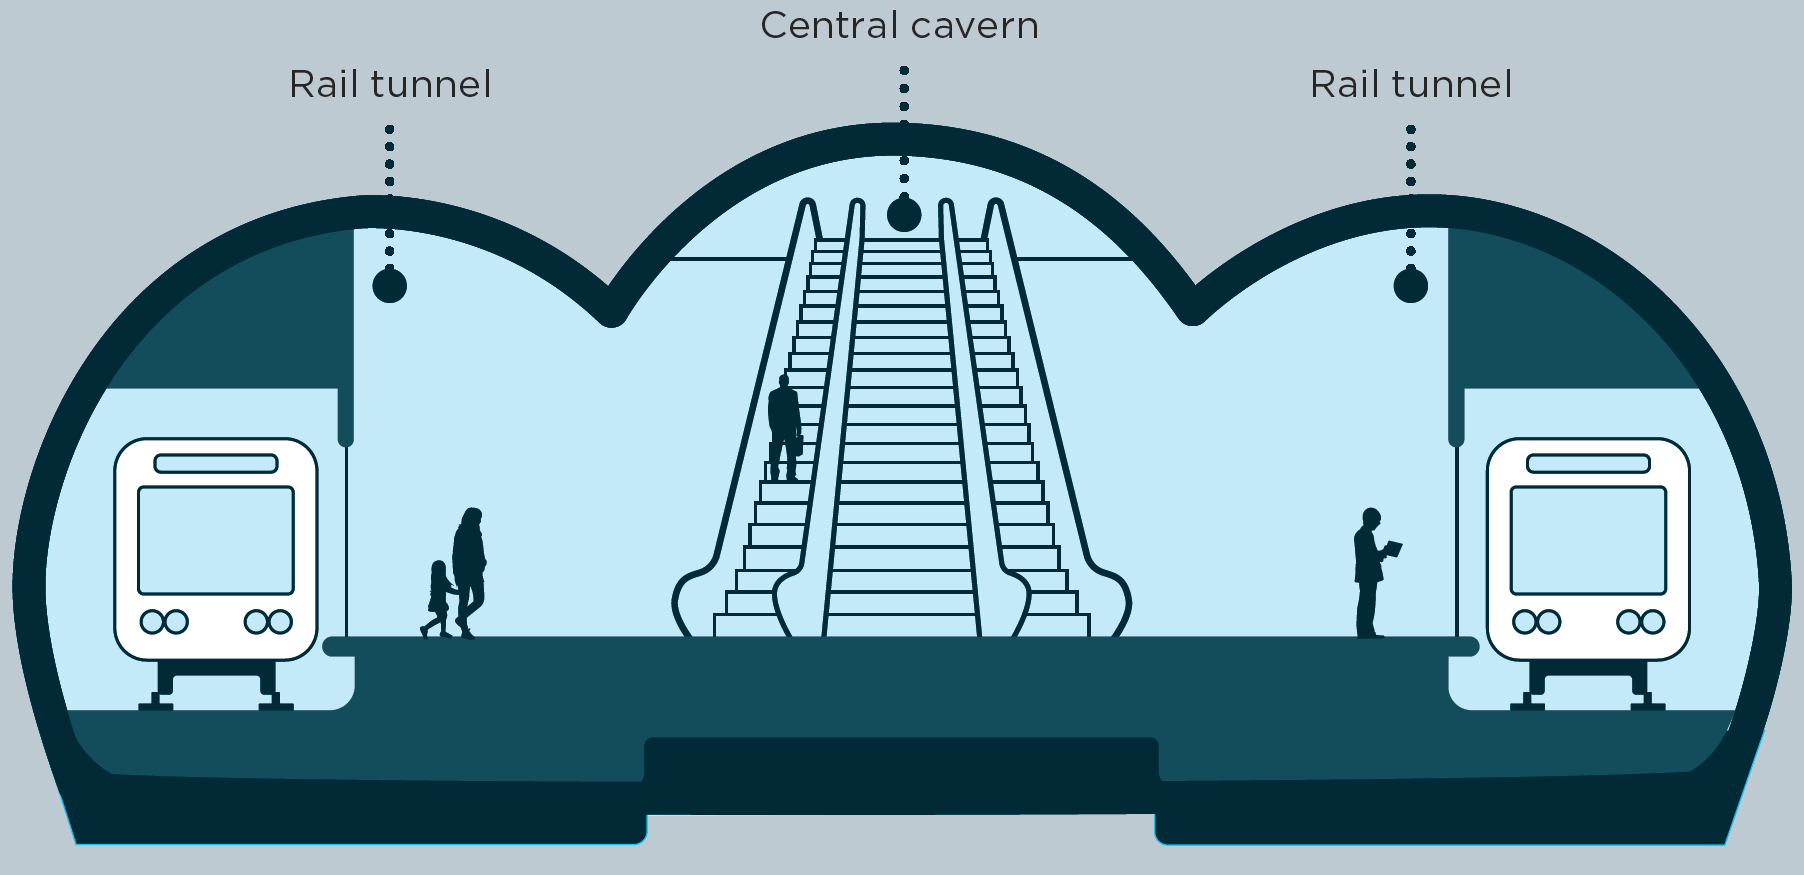 Infographic displaying the unique 'Trinocular cavern' design